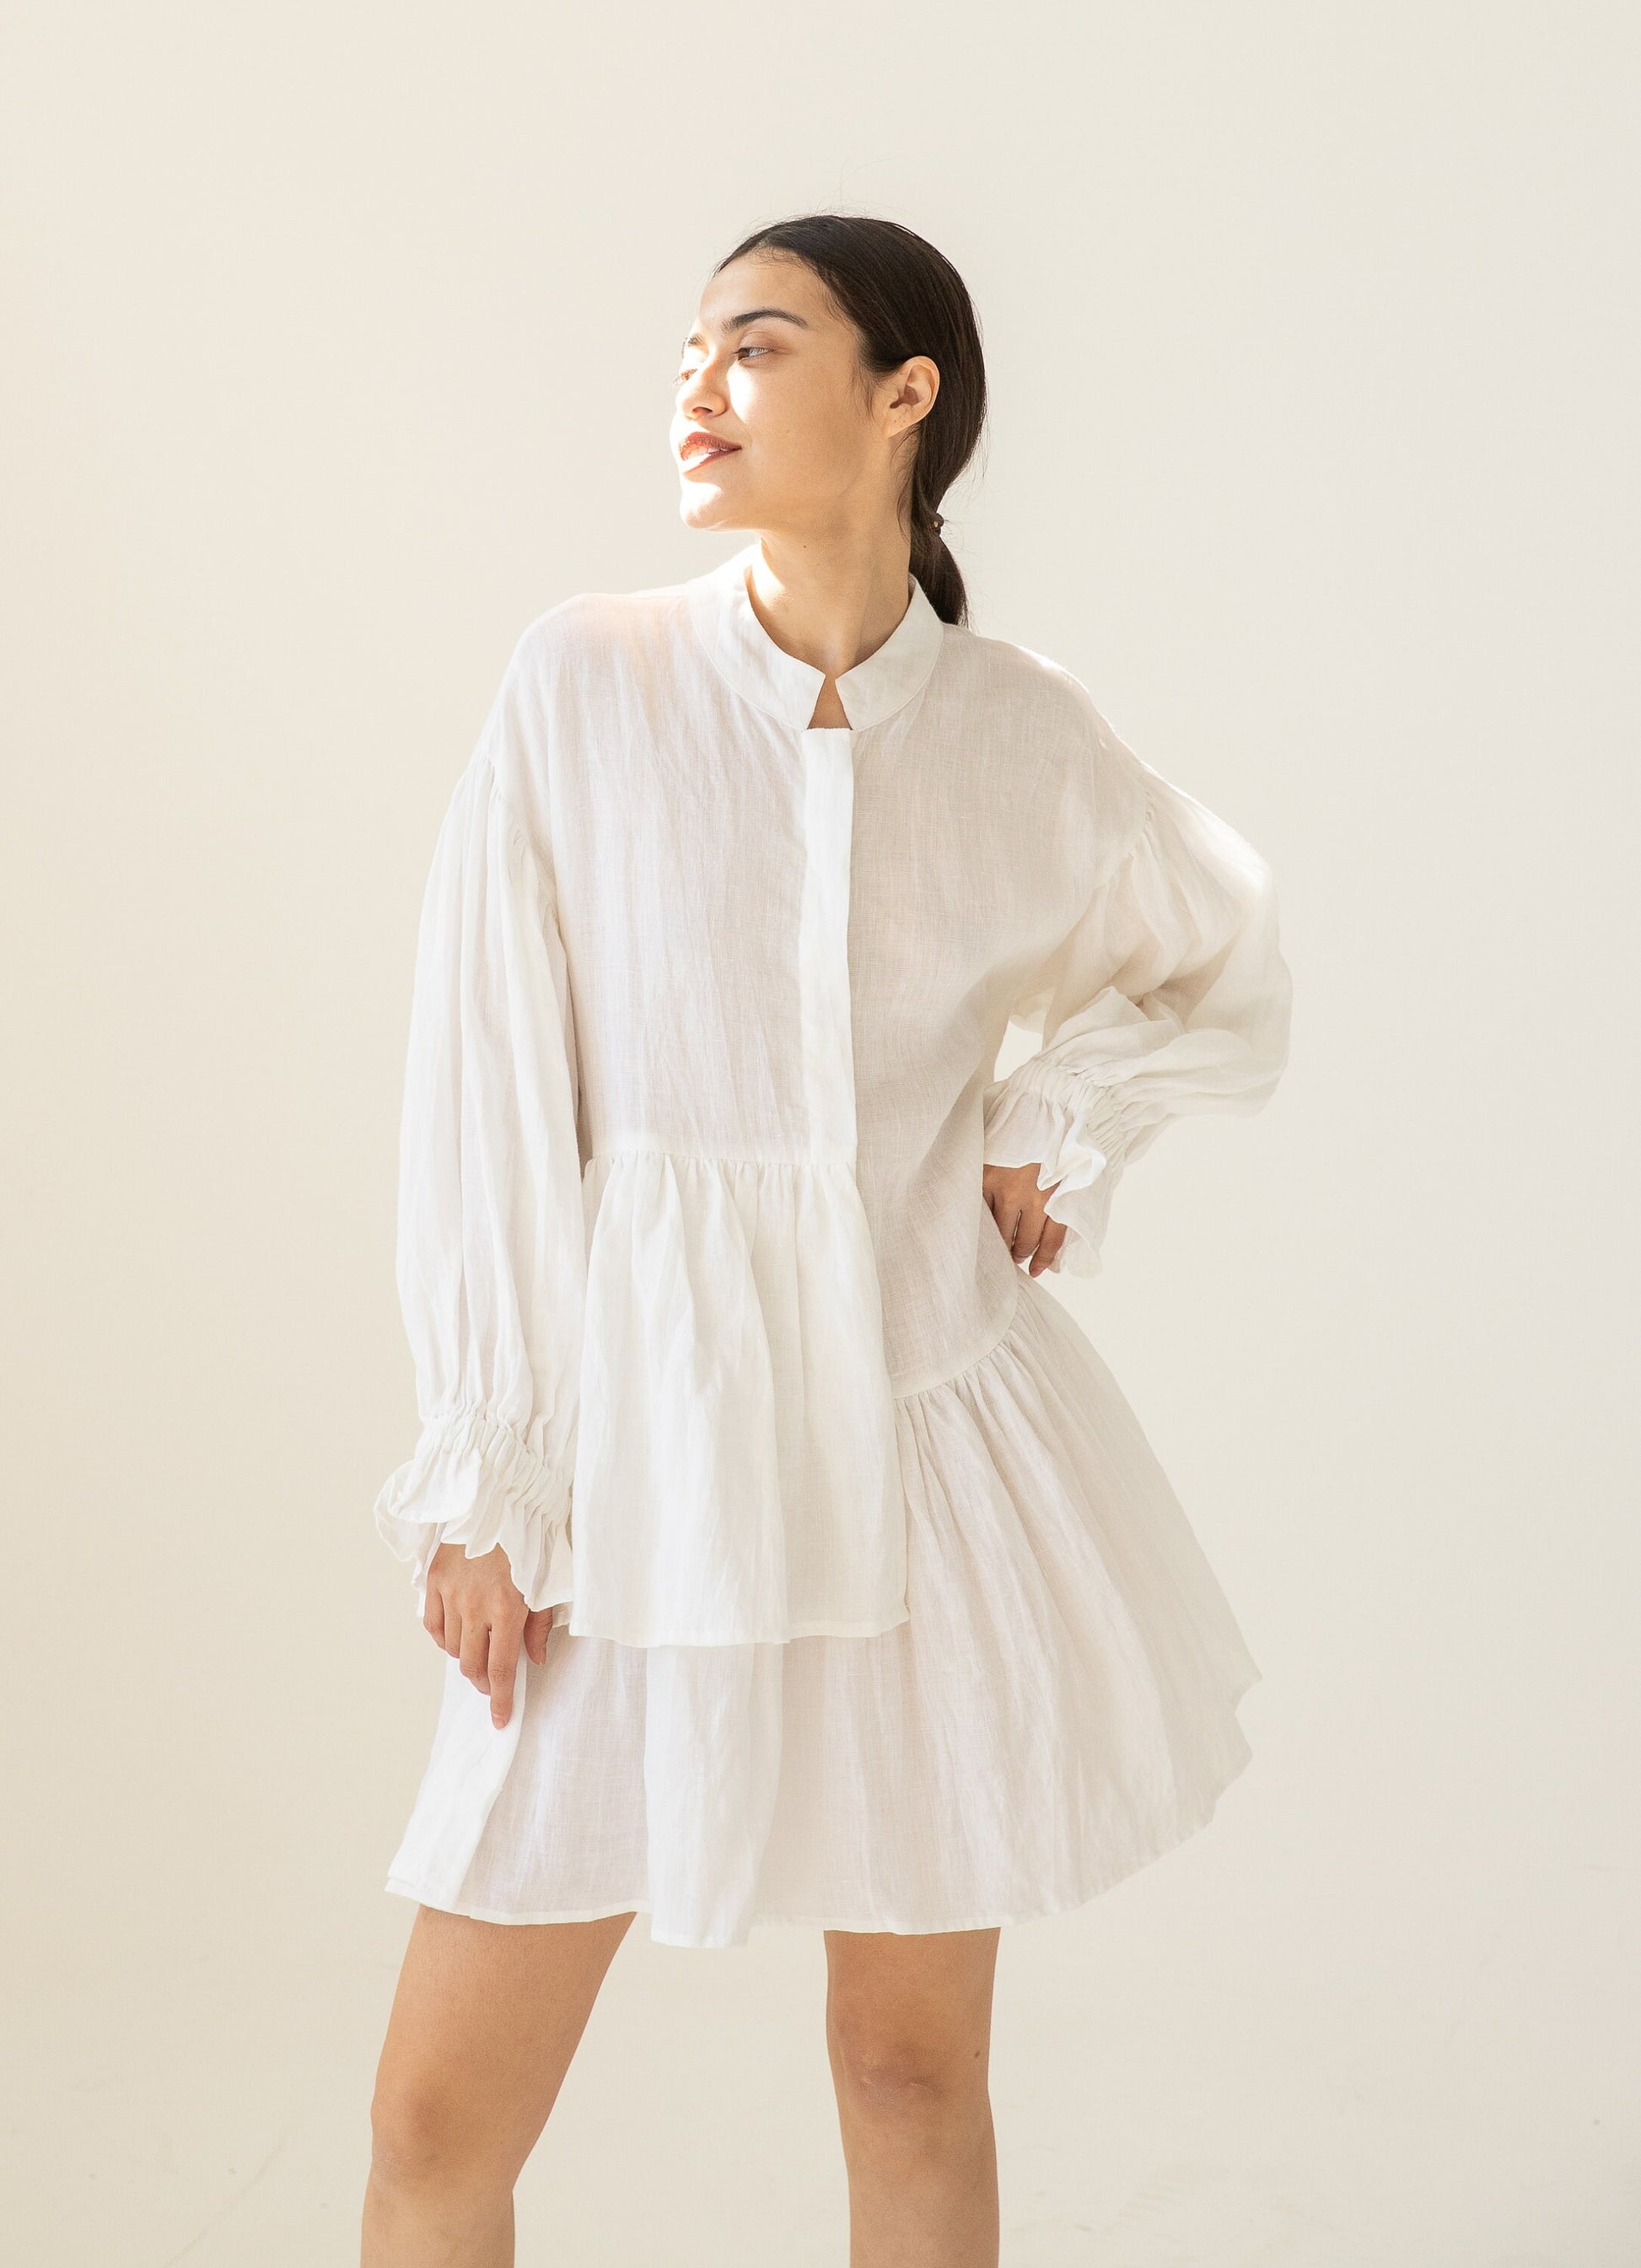 Model showcasing the elegant drape of the Asymmetric Linen Tunic.